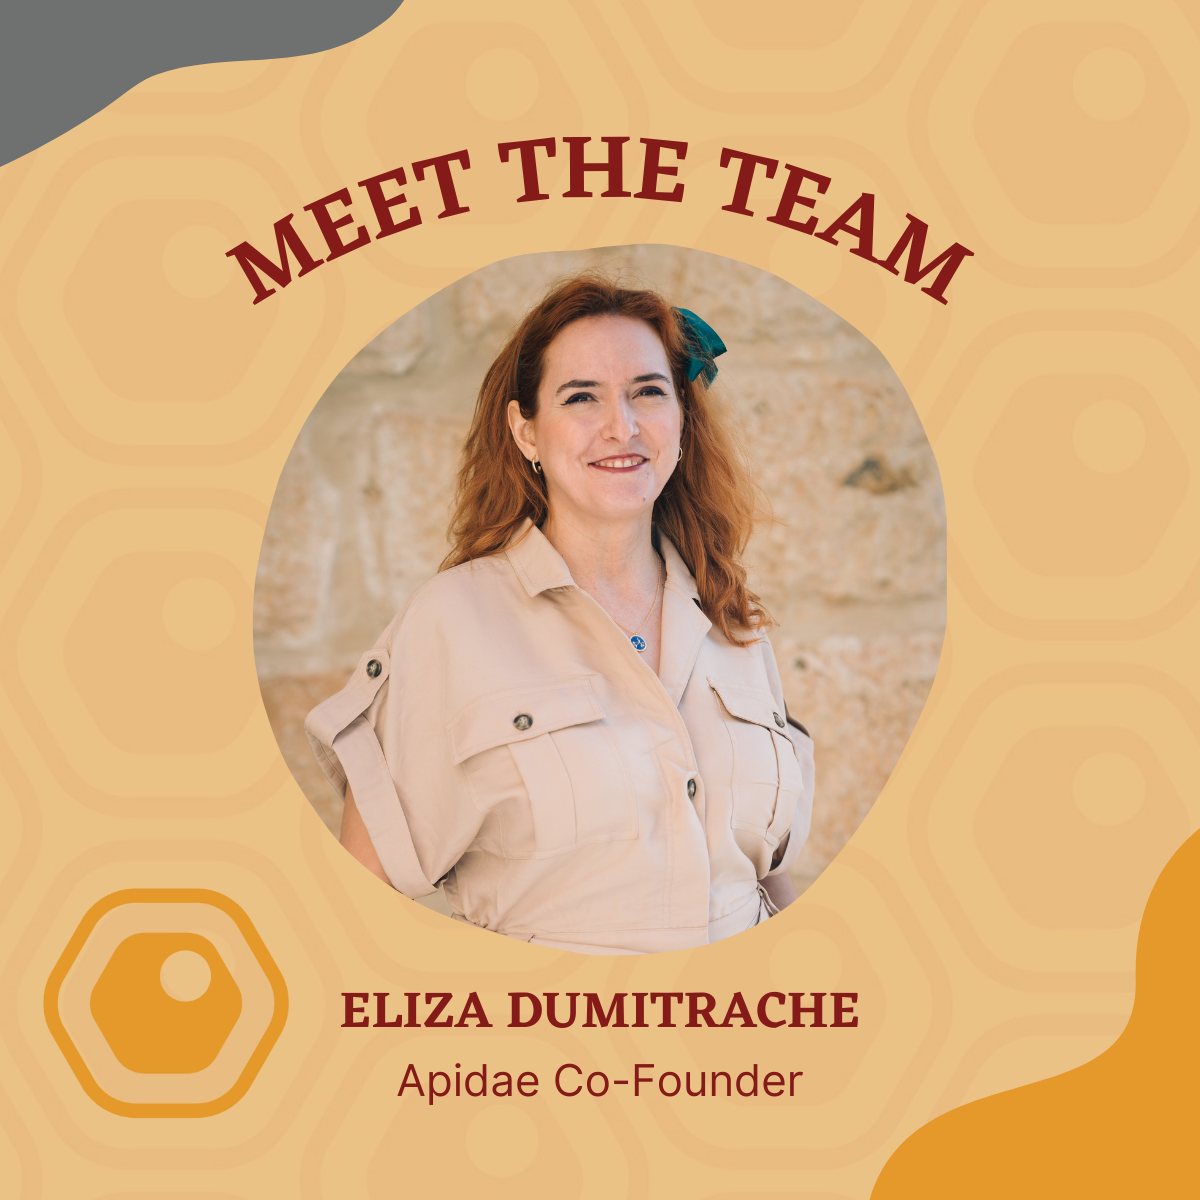 Eliza Dumitrache - Apidae's Growth Marketing Expert